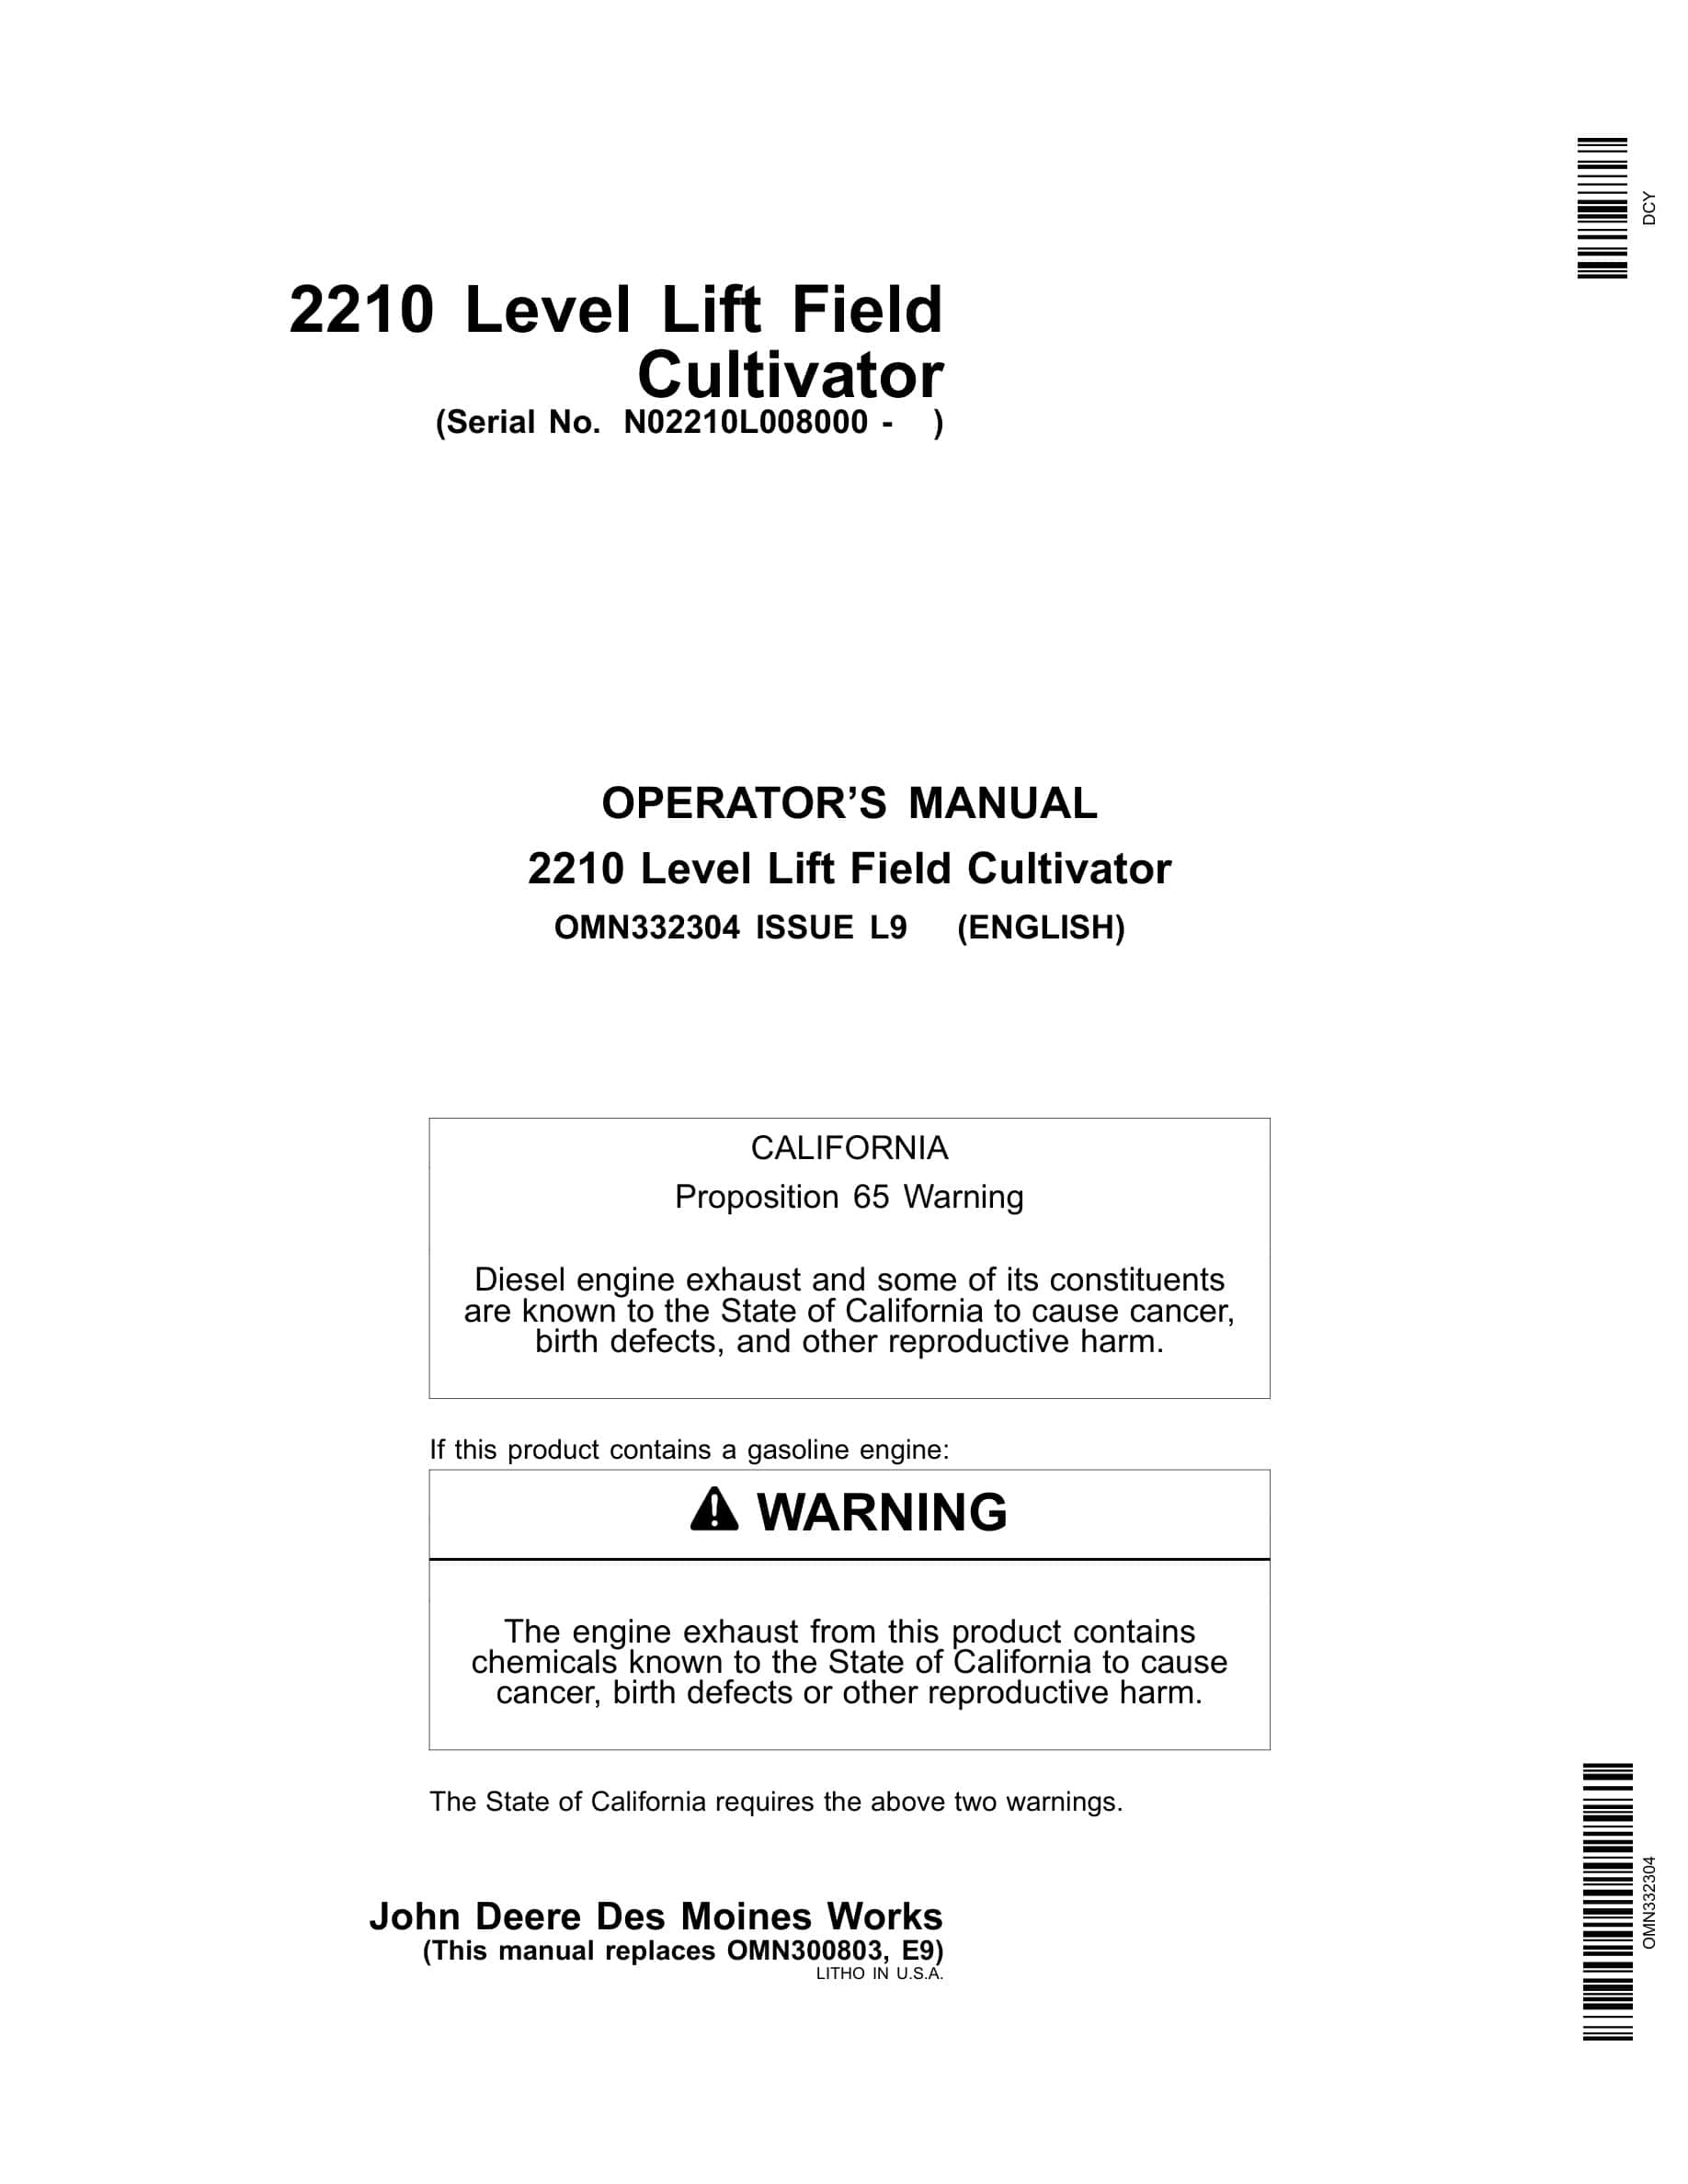 John Deere 2210 Level Lift Field Cultivator Operator Manual OMN332304-1